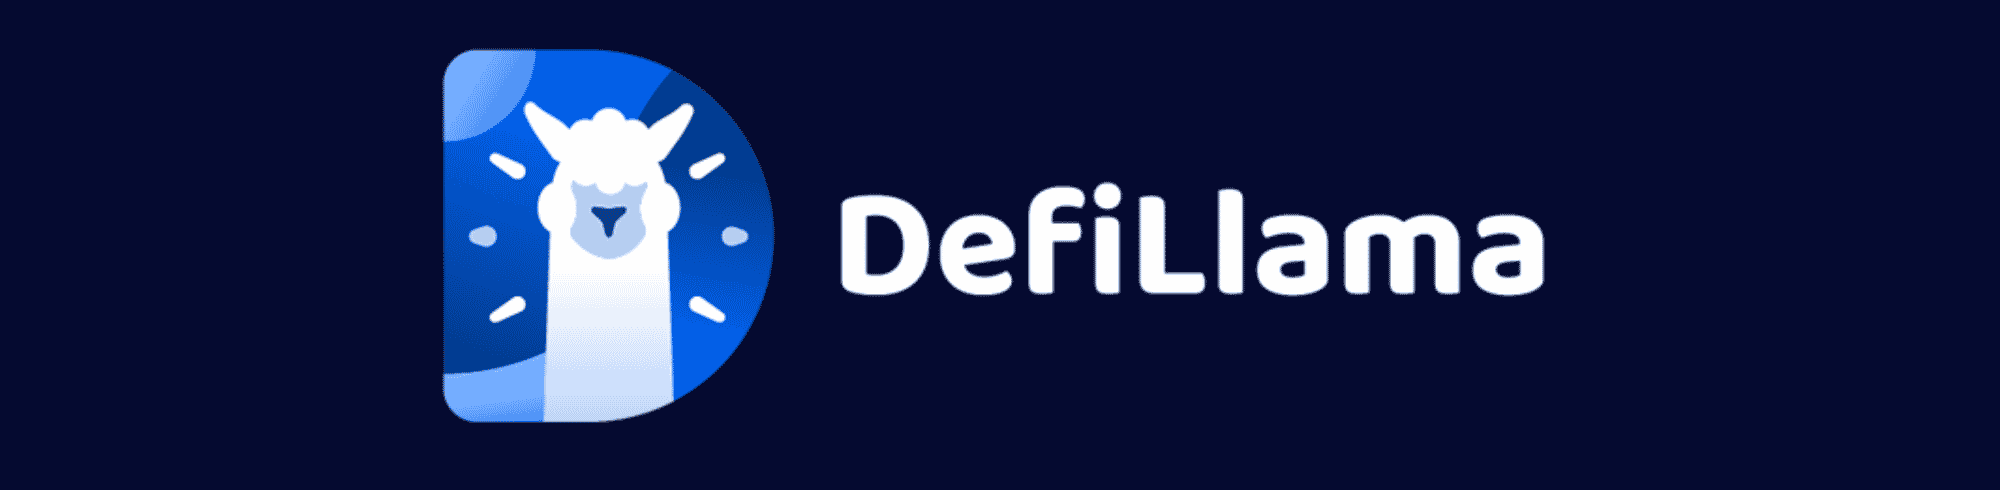 DefiLlama blockchain analytics - Analyze DeFi projects